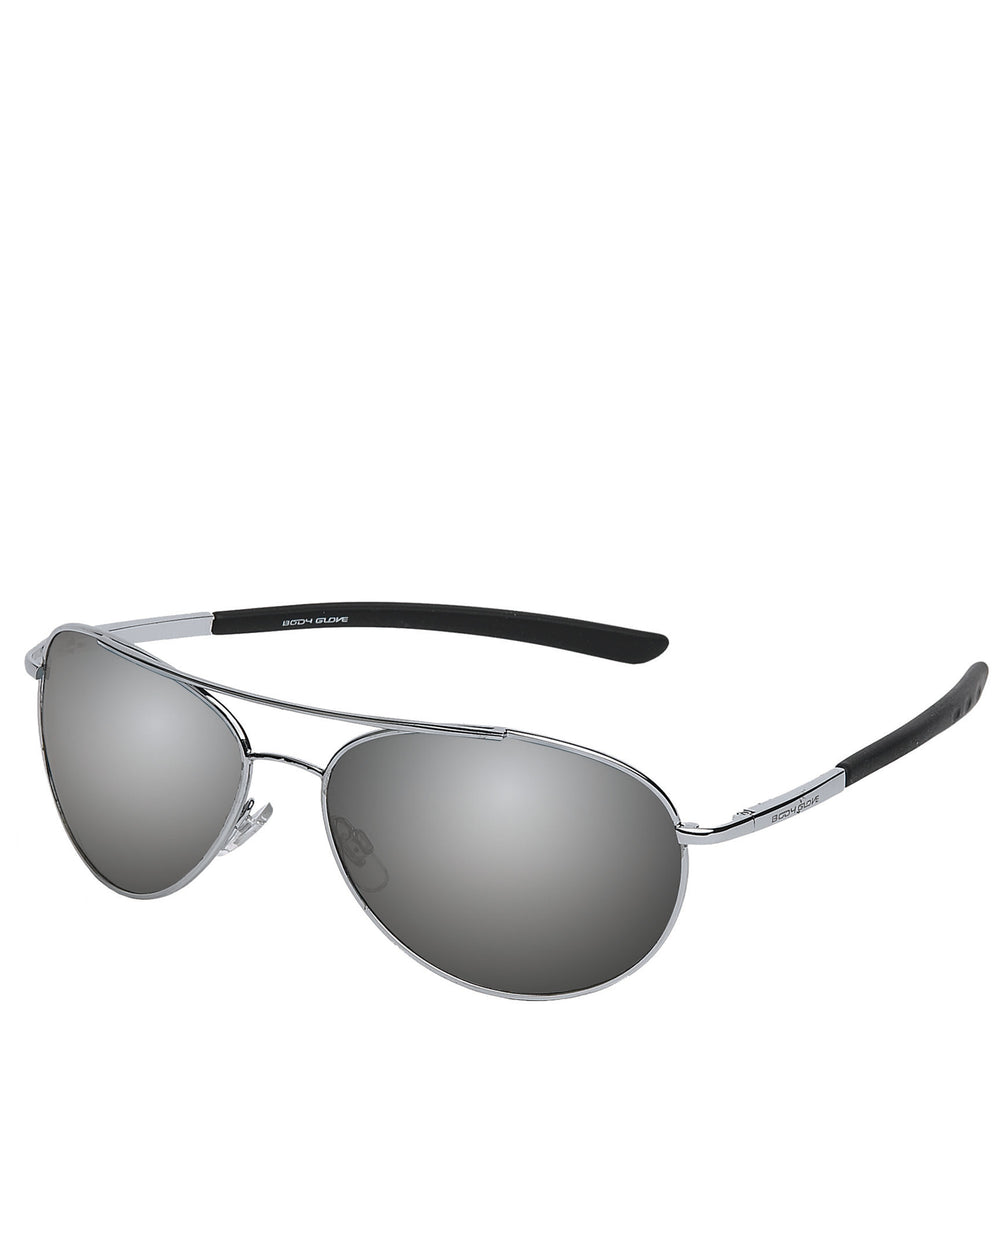 Men's Oahu Polarized Sunglasses - Silver